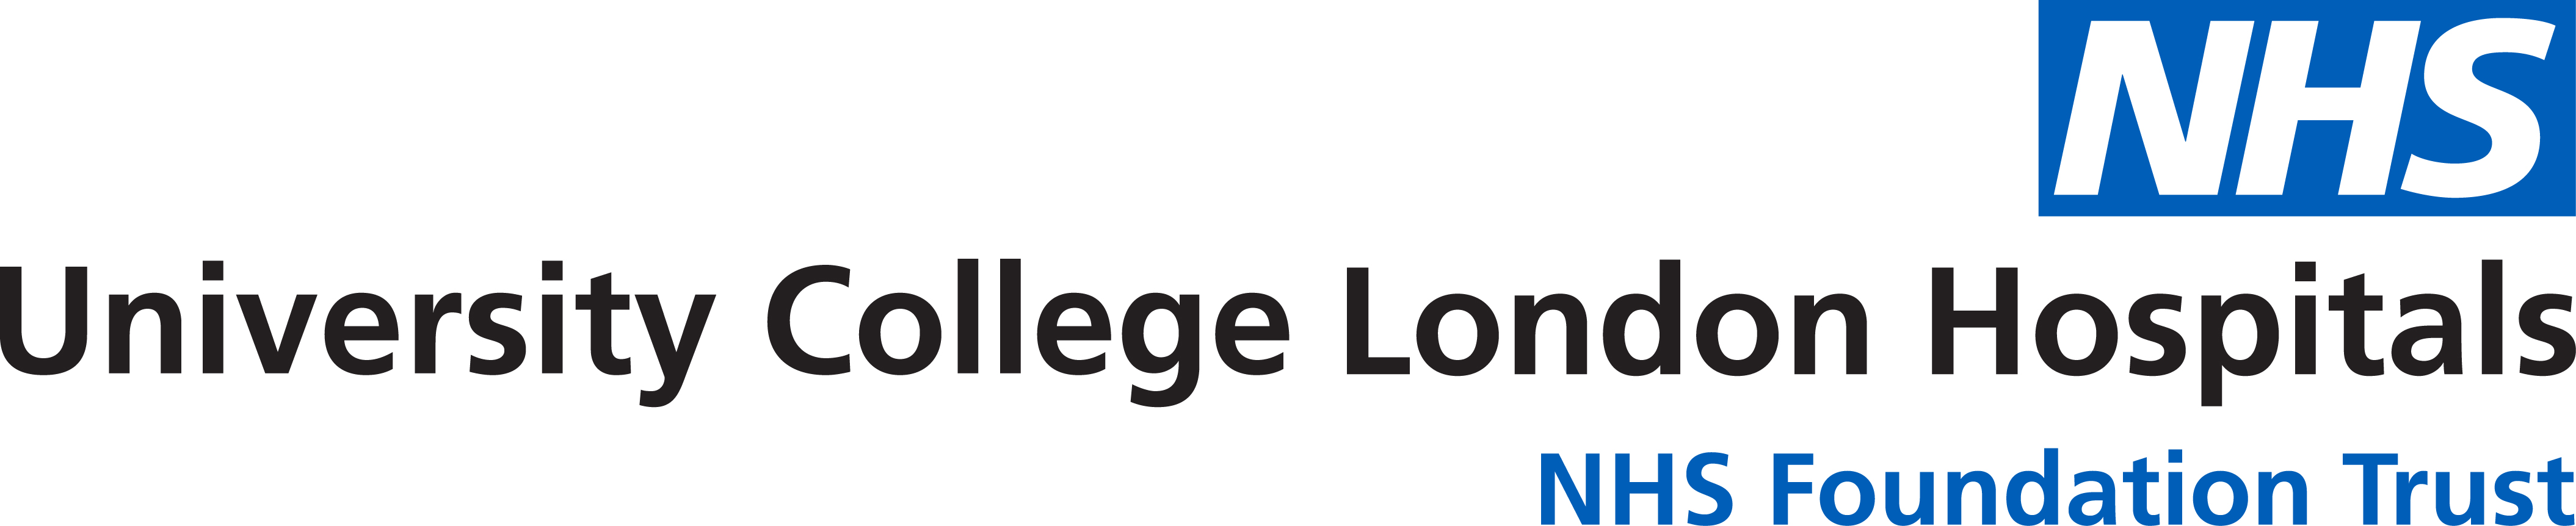 UCLH logo colour